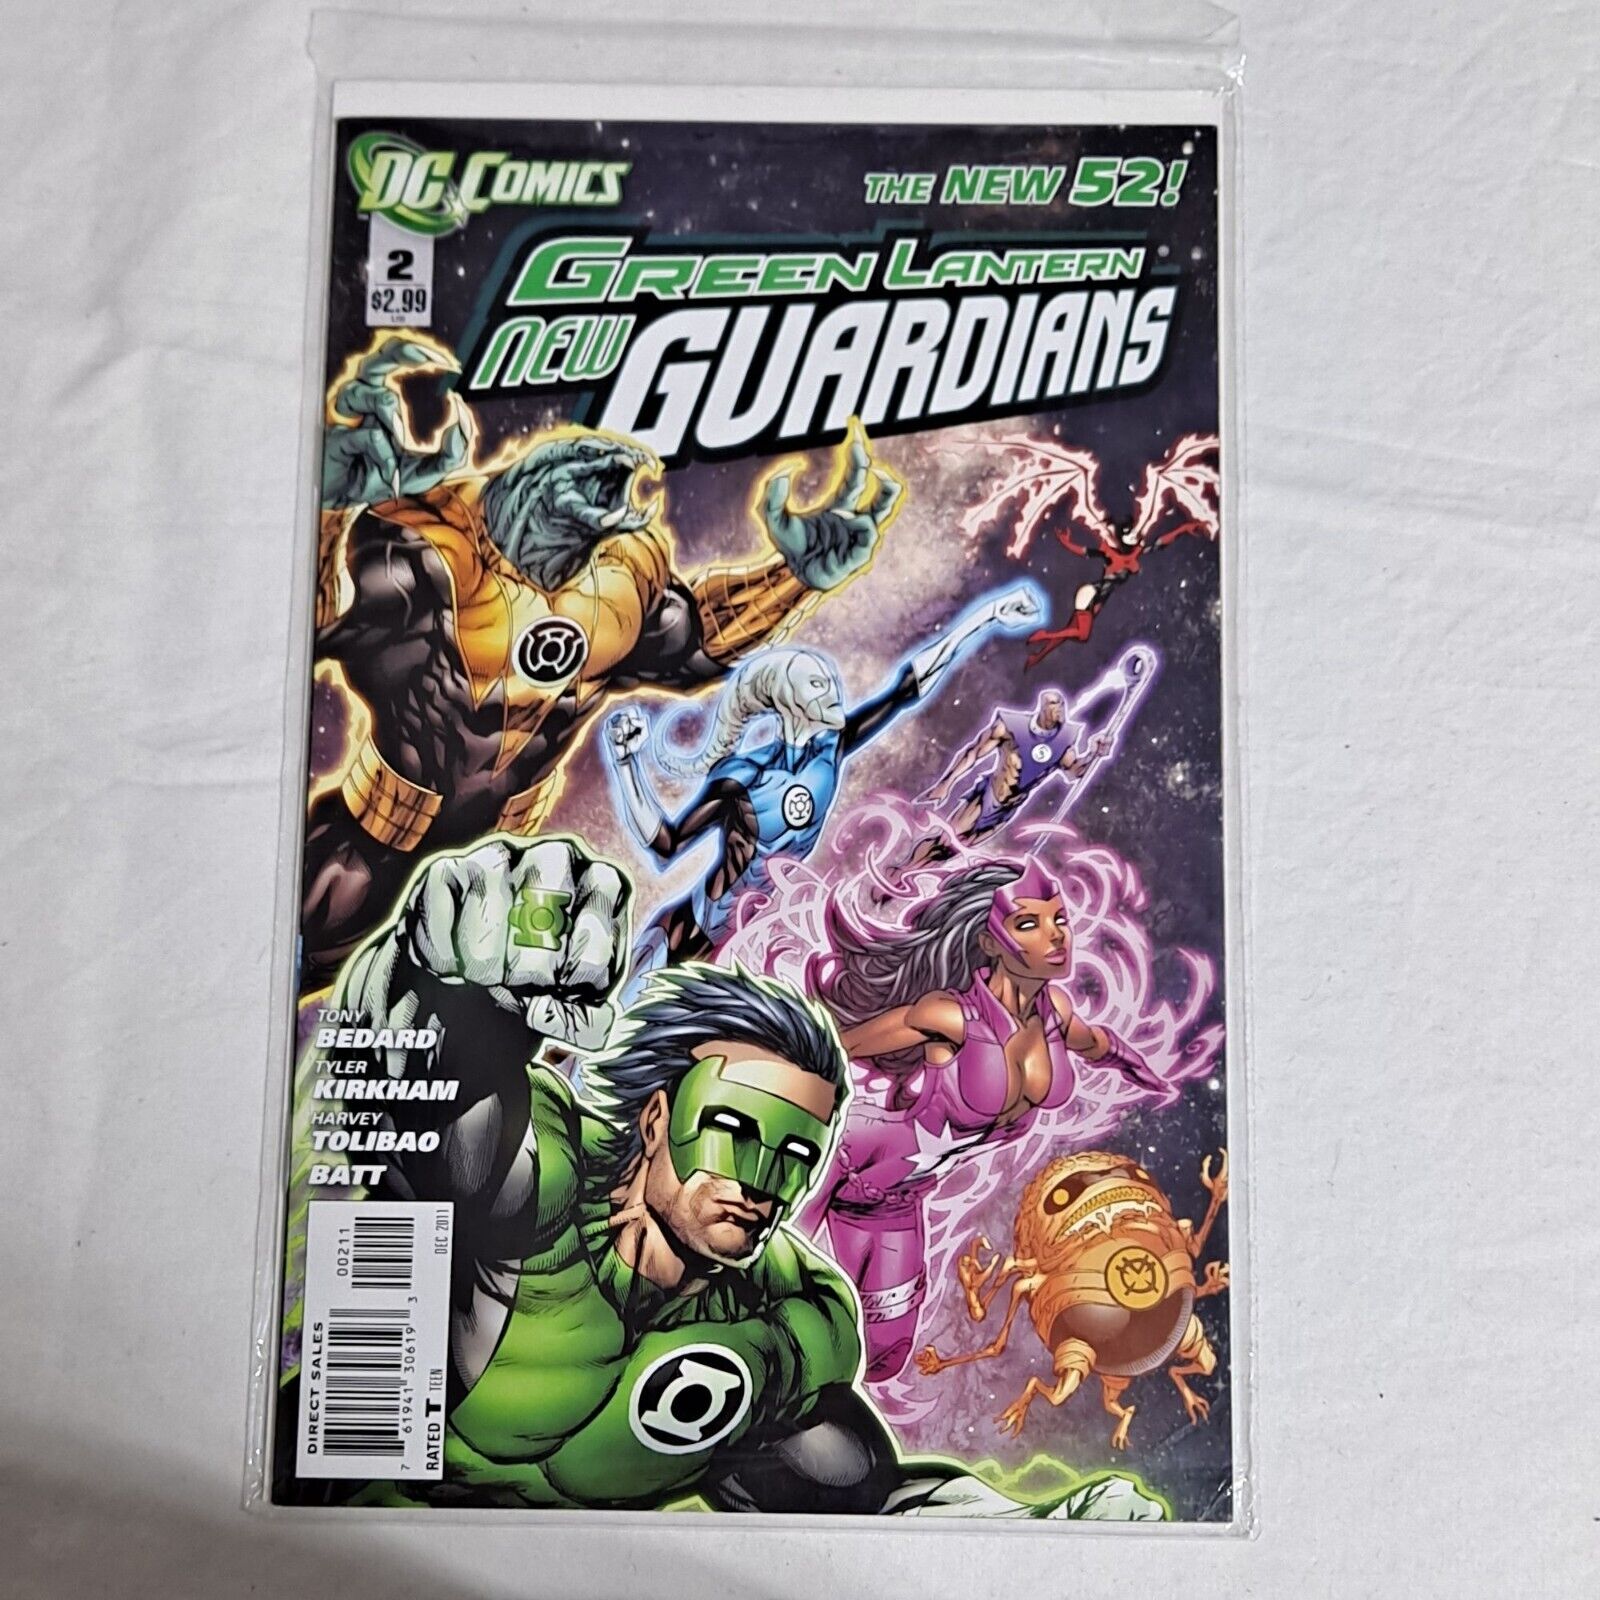 Green Lanter New Guardians #2 The New 52 Dec 2011 Tony Bedard Tyler Kirkham